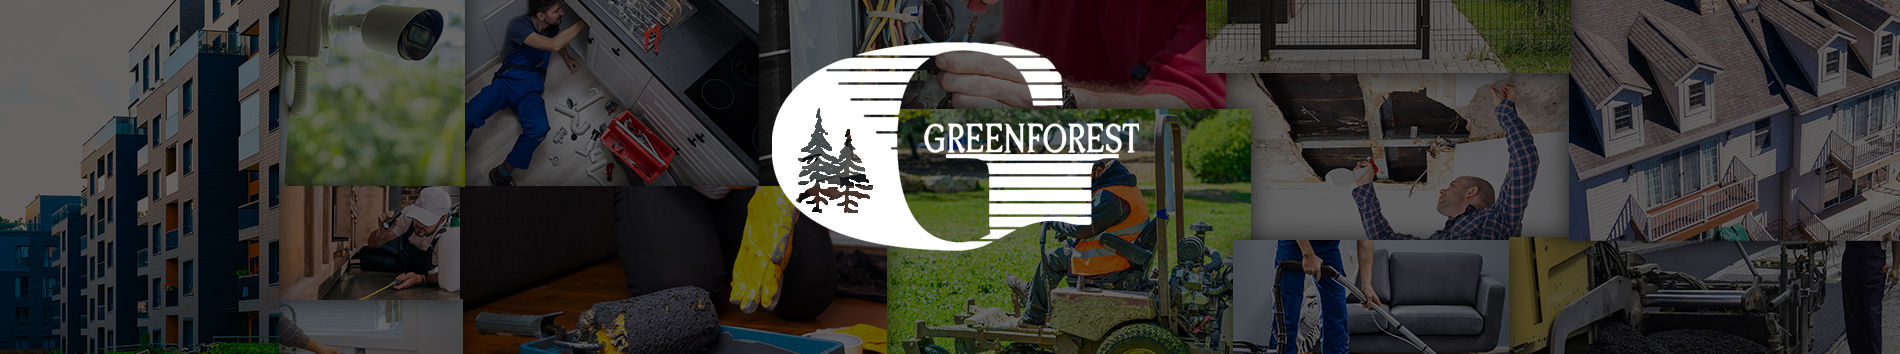 Greenforest Landscaping & Maintenance